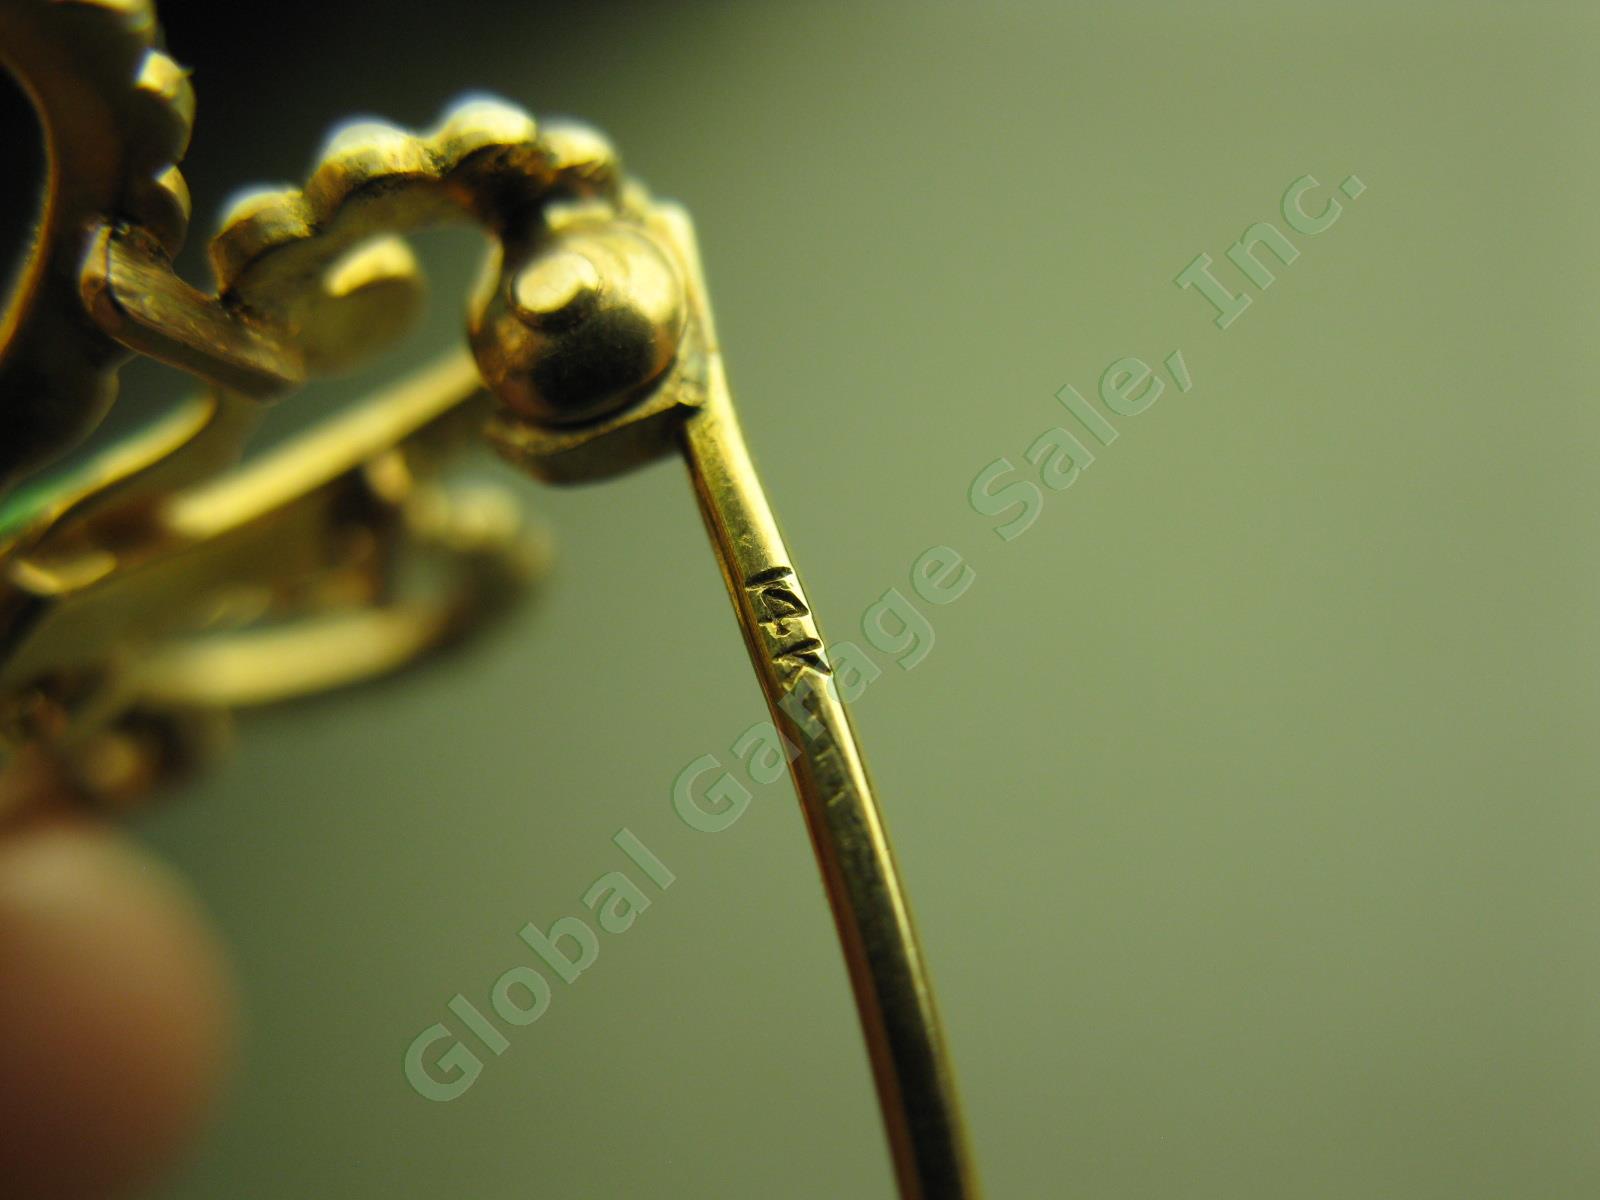 Vtg Antique Estate 14K Gold Pearl Green Enamel Pin Brooch Pendant 3.9 Gram $1200 2